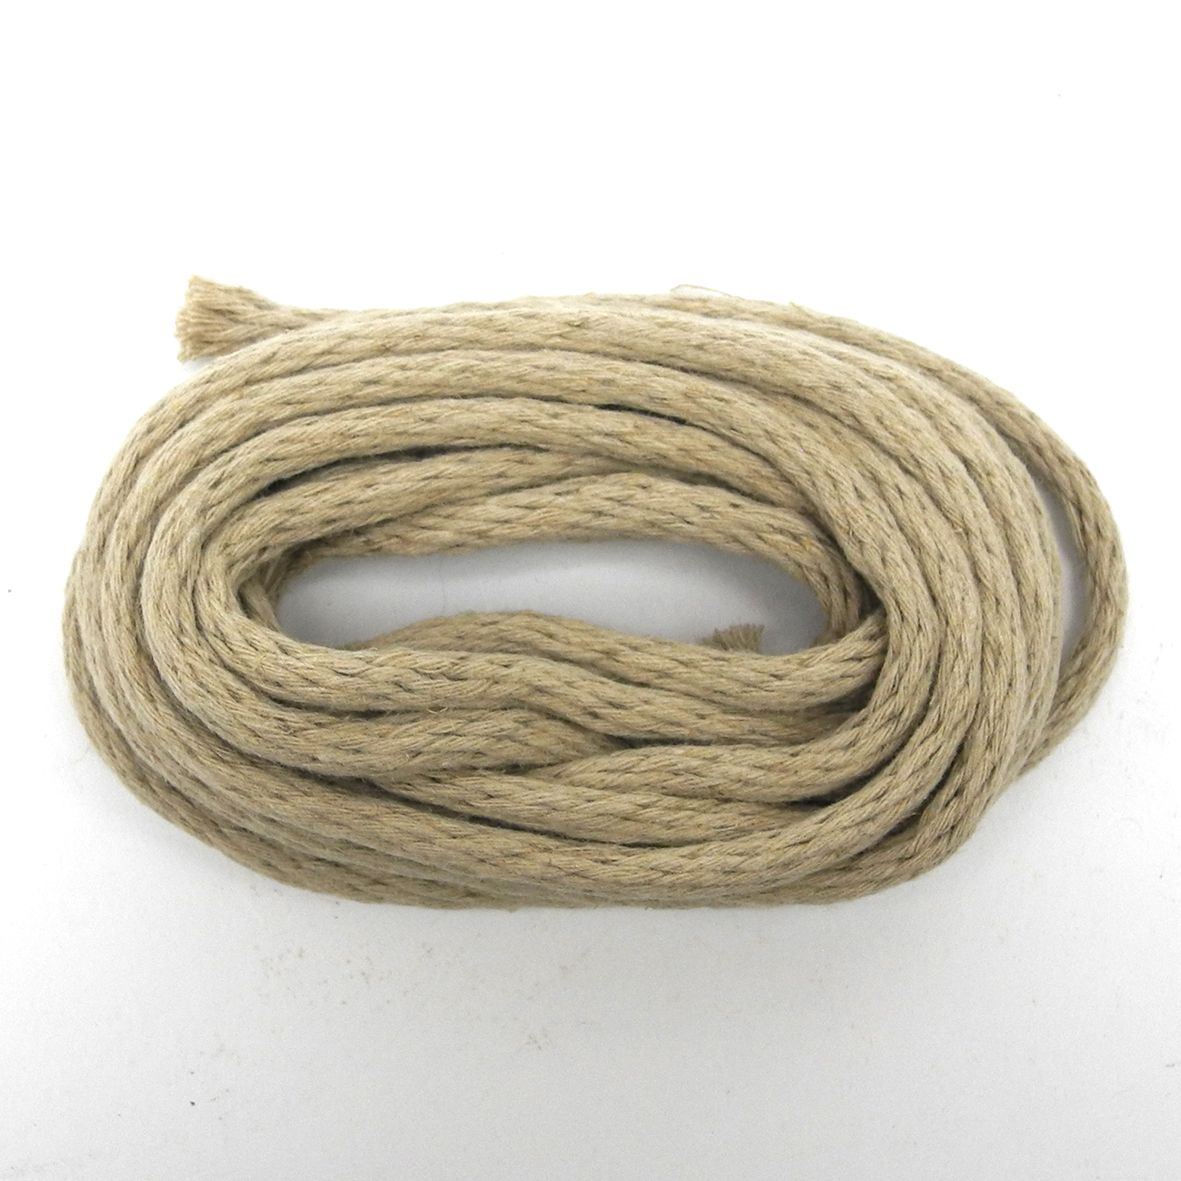 Thin Rope 5m #4653a - Coastal Vintage